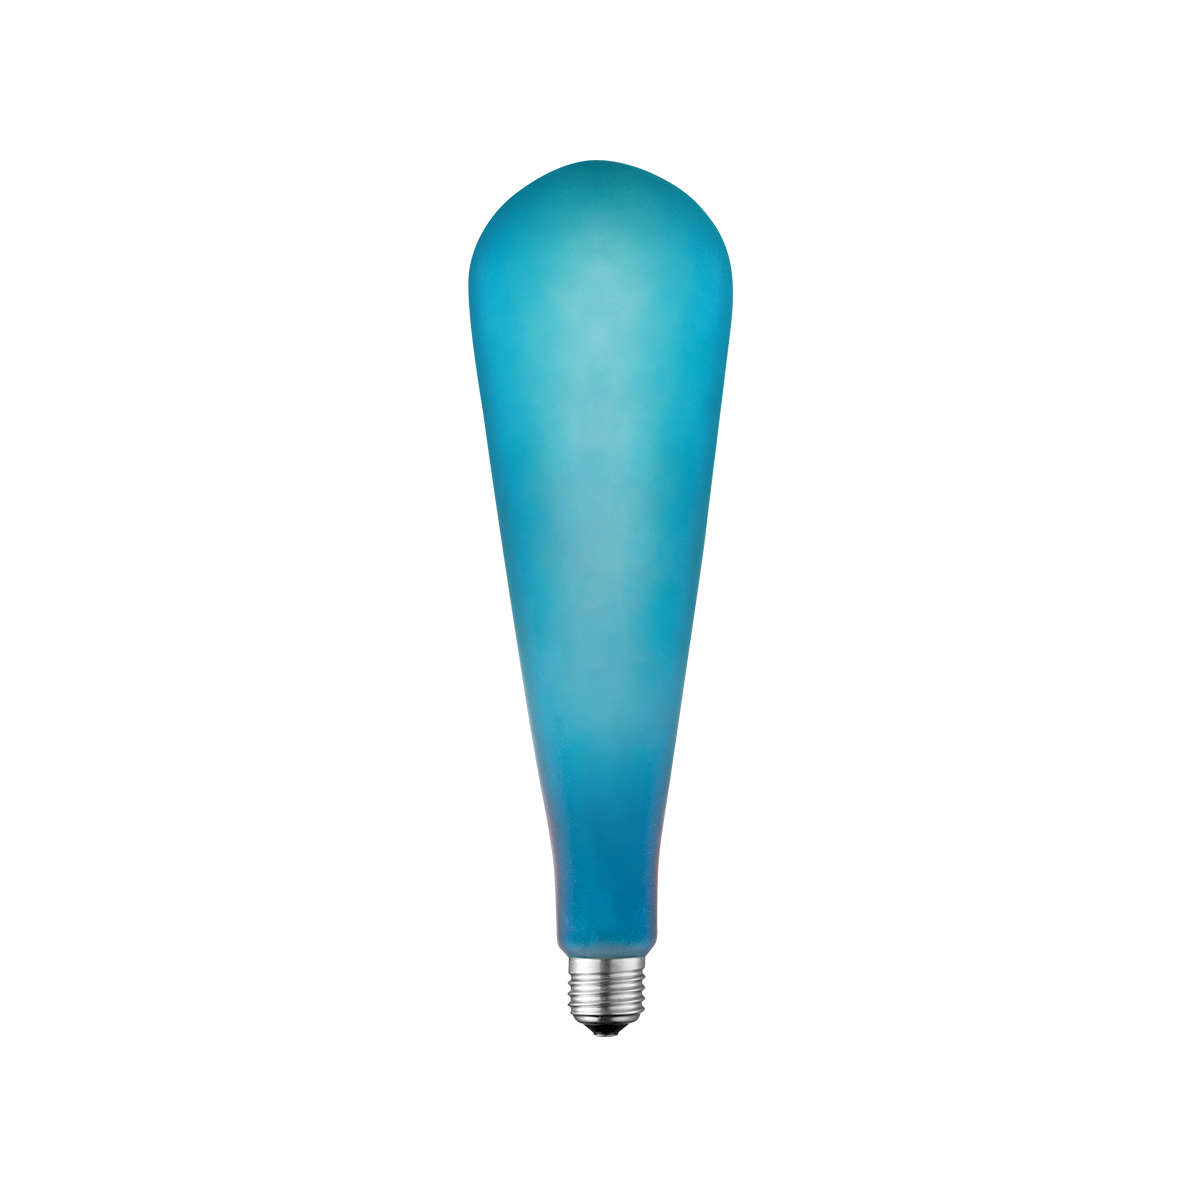 Tangla lighting - TLB-9002-04BL - LED Light Bulb Single Spiral filament - 4W blue opal - standard - non dimmable - E27